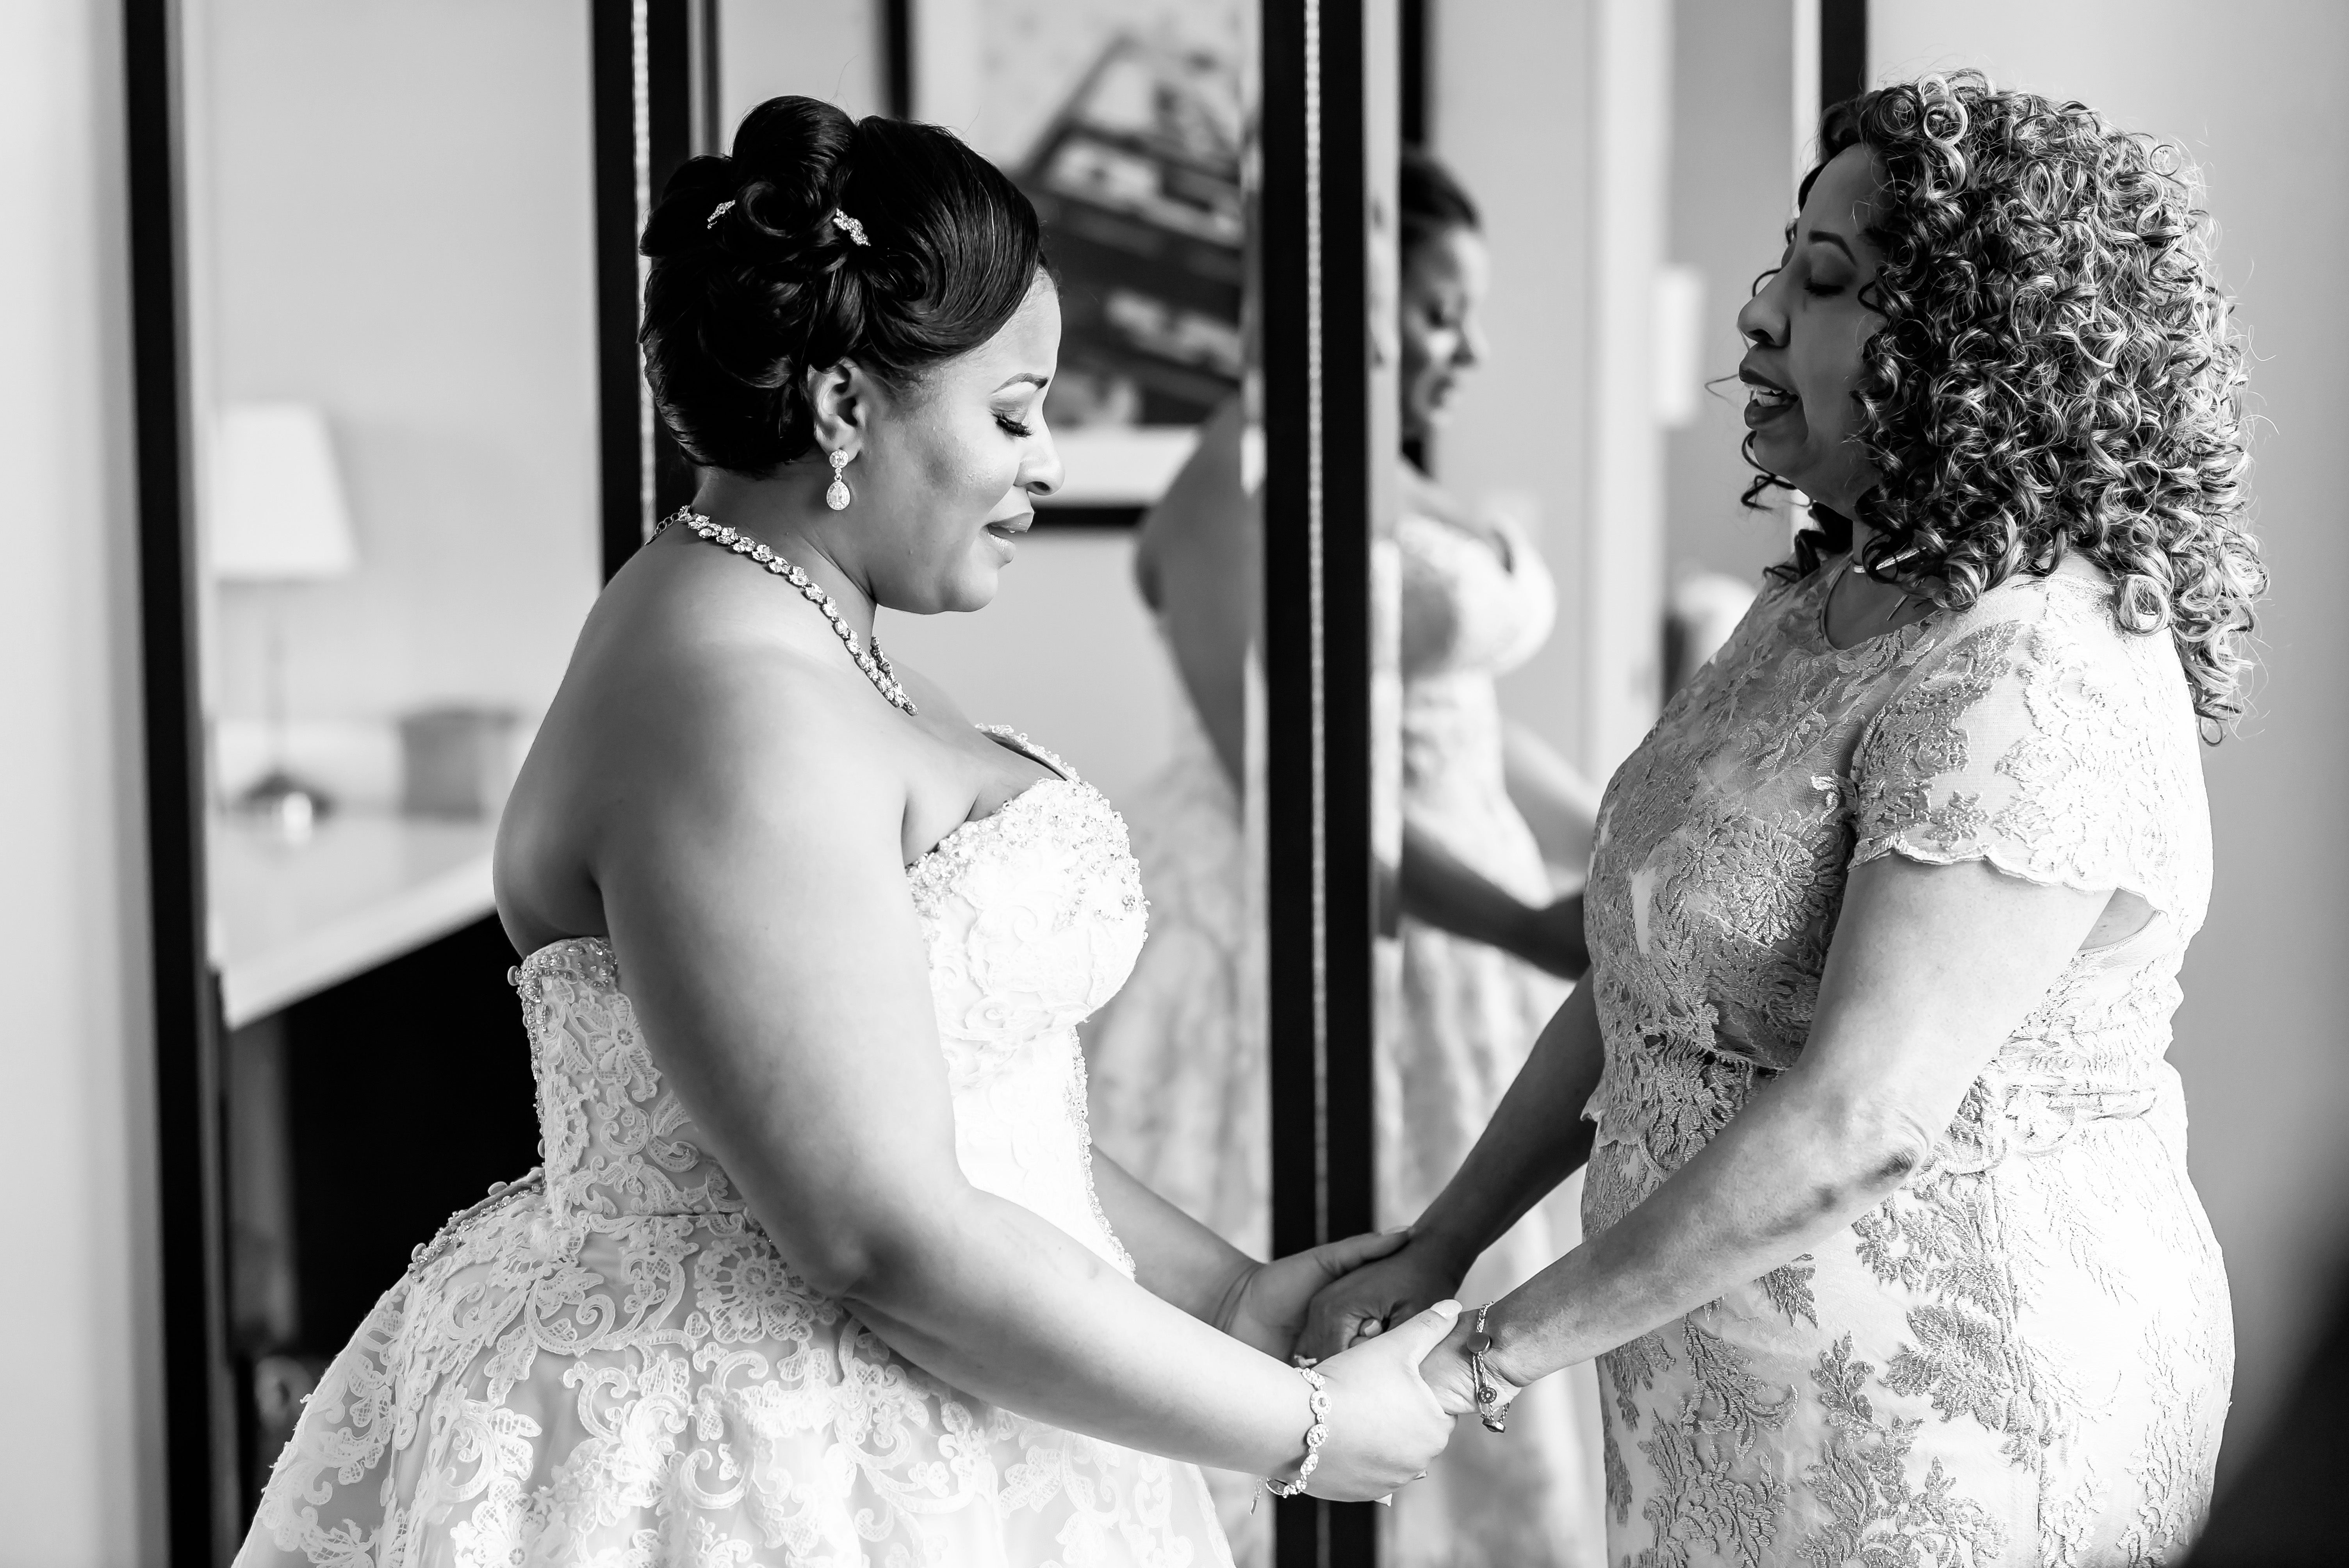 Bridal Bliss: Andre And Kimberly Had A Romantic Wedding Day In Atlanta